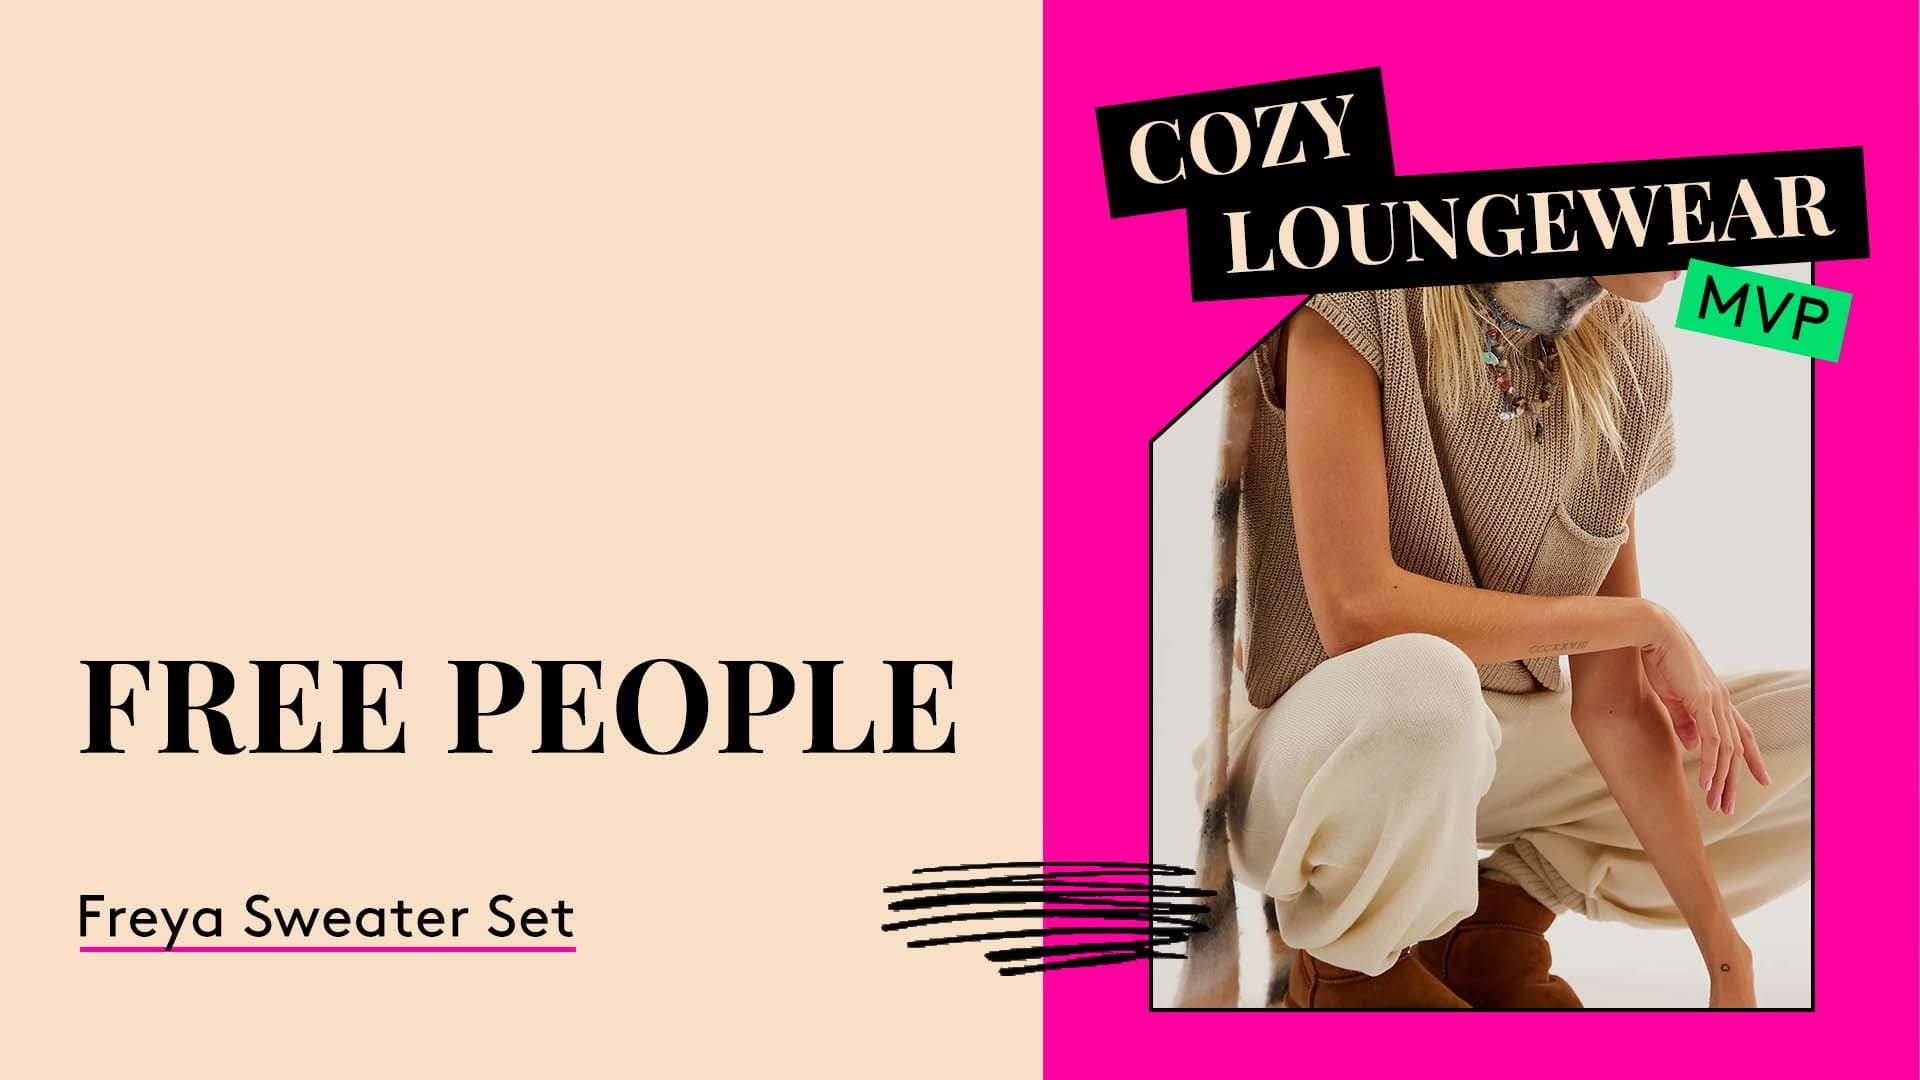 Cozy Loungewear MVP. Free People Freya Sweater Set.